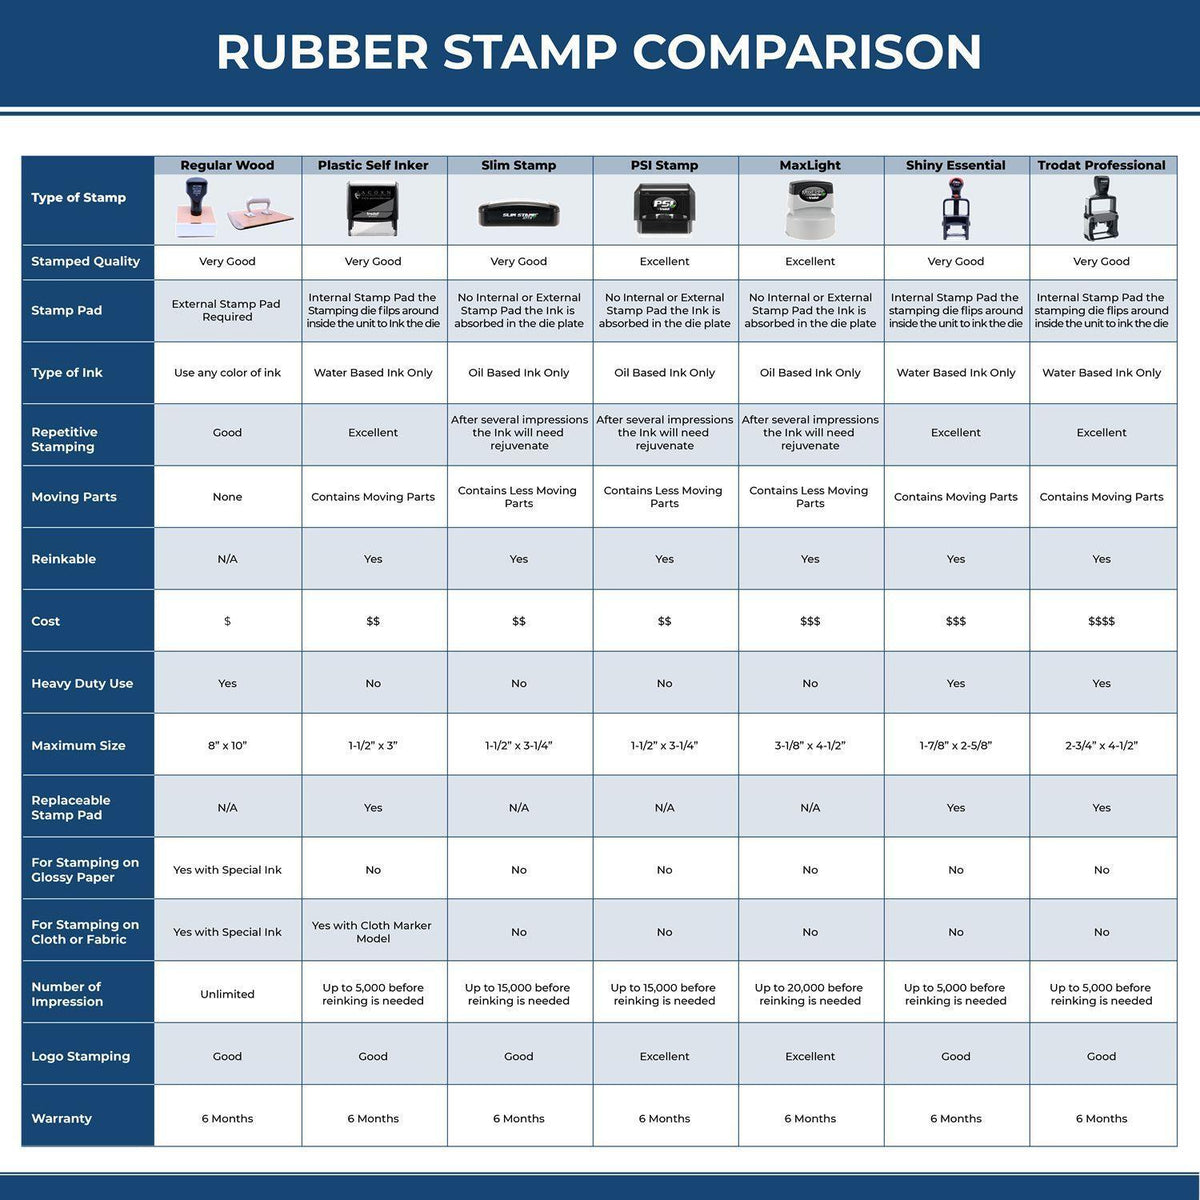 Large Advance Directive Rubber Stamp 4528R Rubber Stamp Comparison